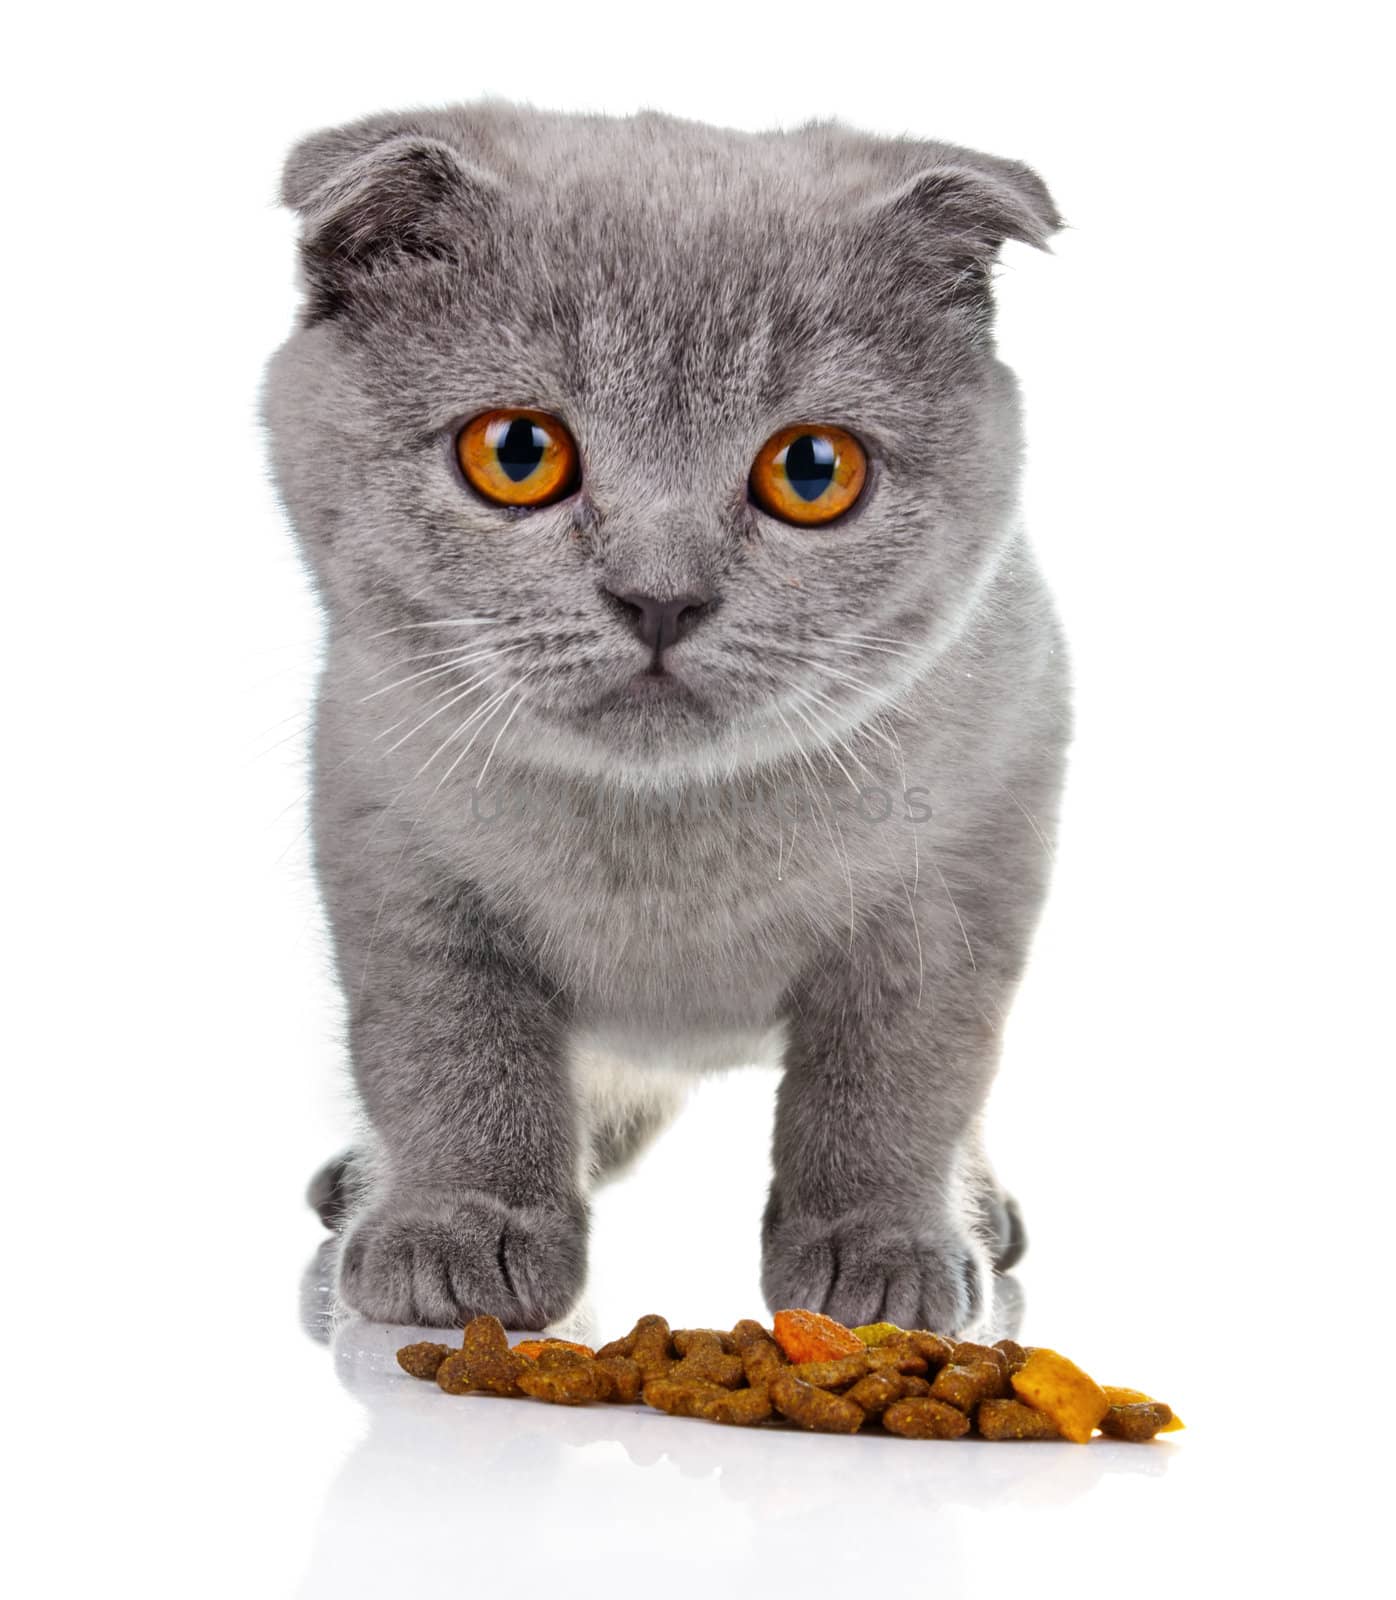 Little kitten eating pet food isolated on white background 